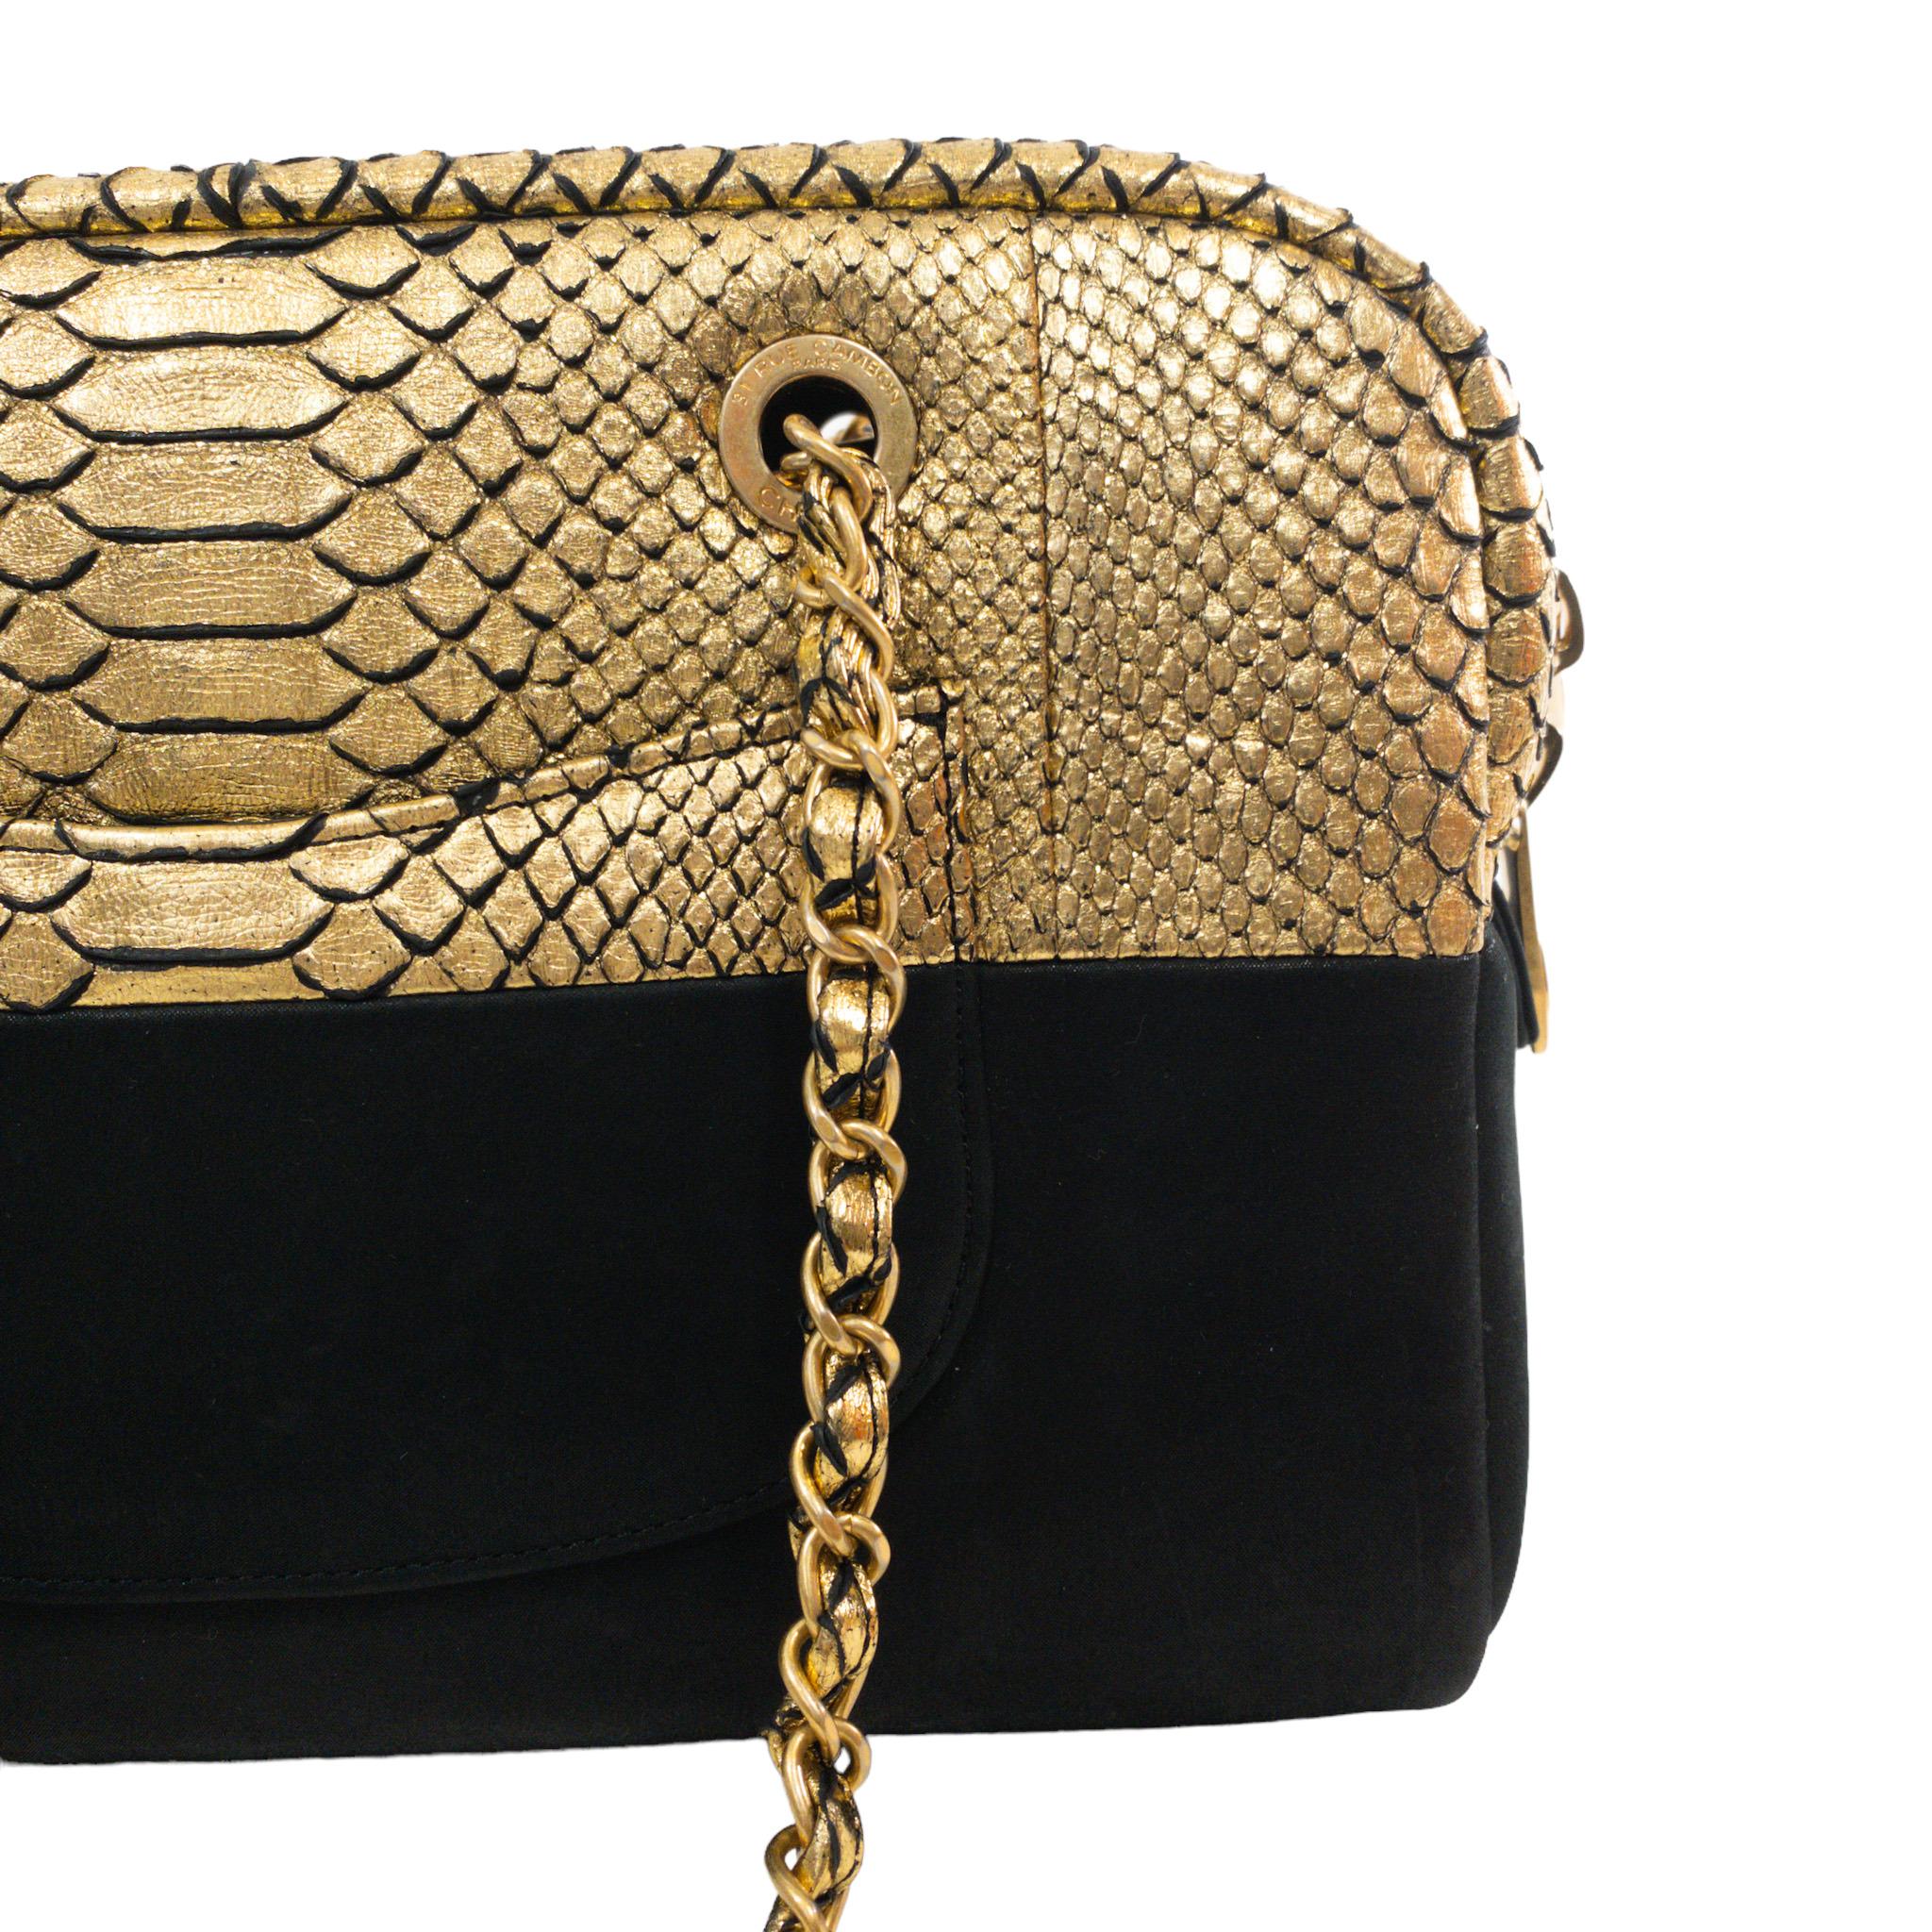 Chanel Metallic Python Suede Bowler Tote Bag For Sale 1